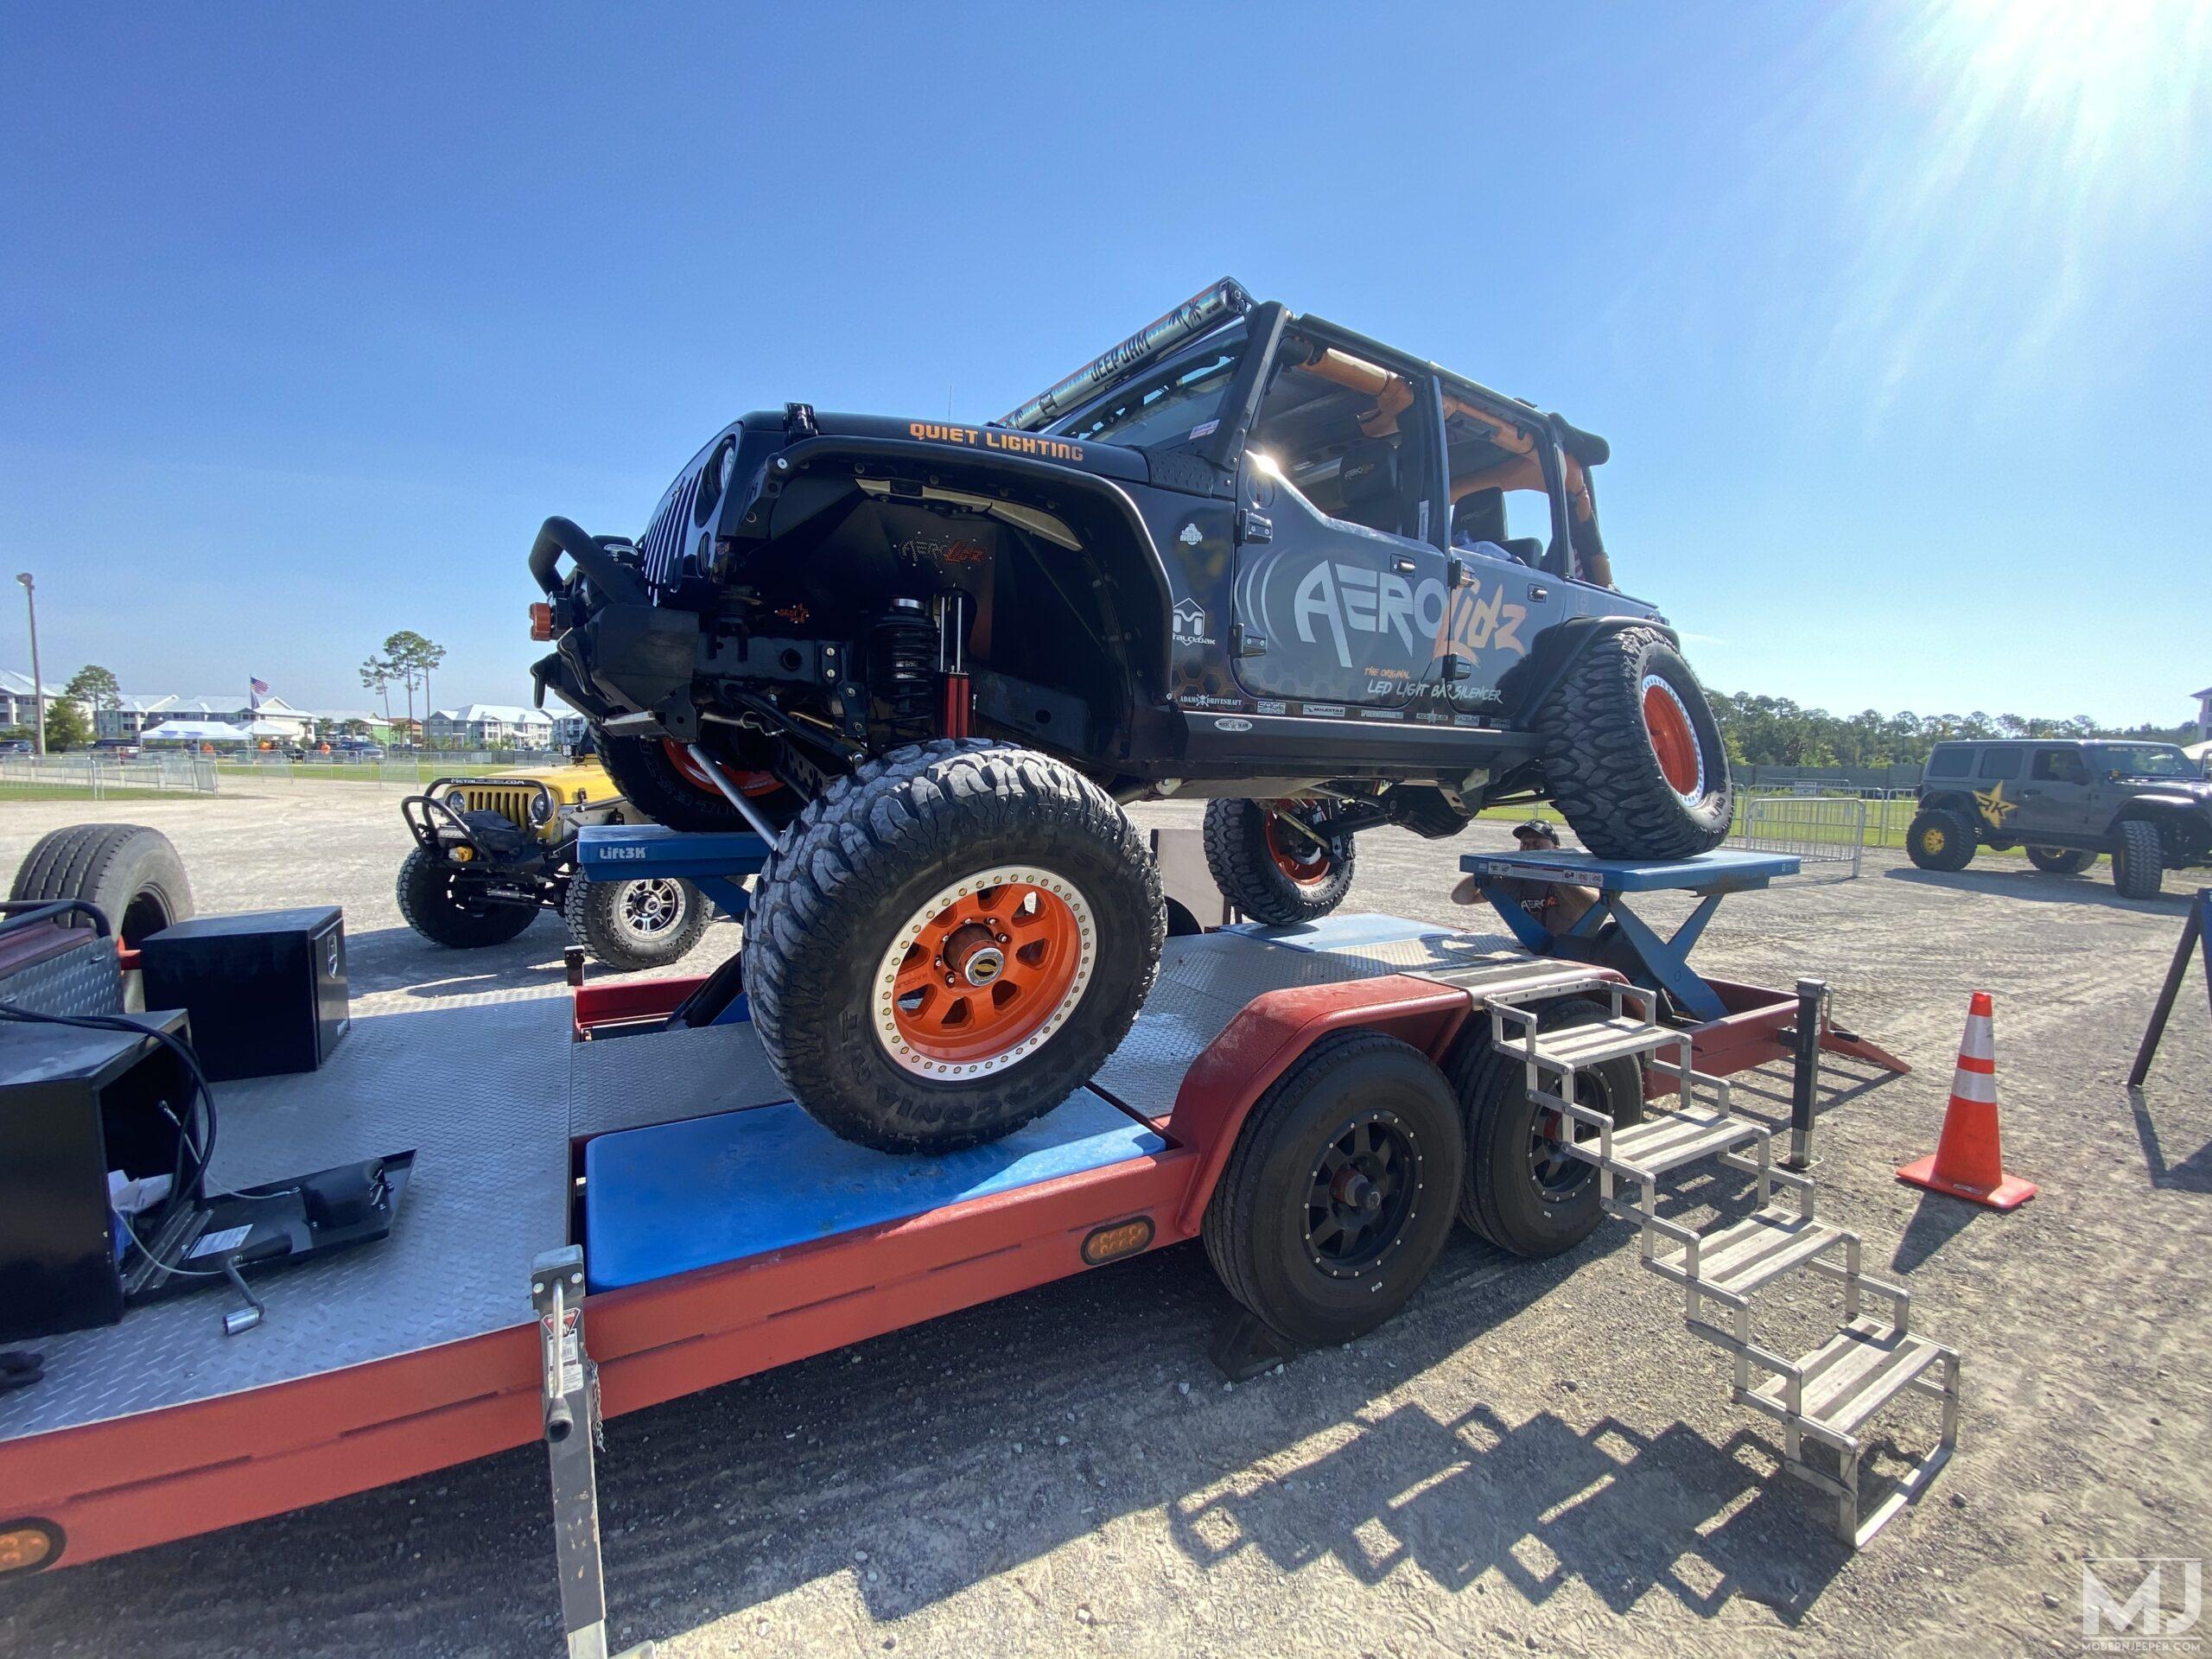 [pics] EVENT Updated! Florida Jeep Jam, Panama City Beach! Modern